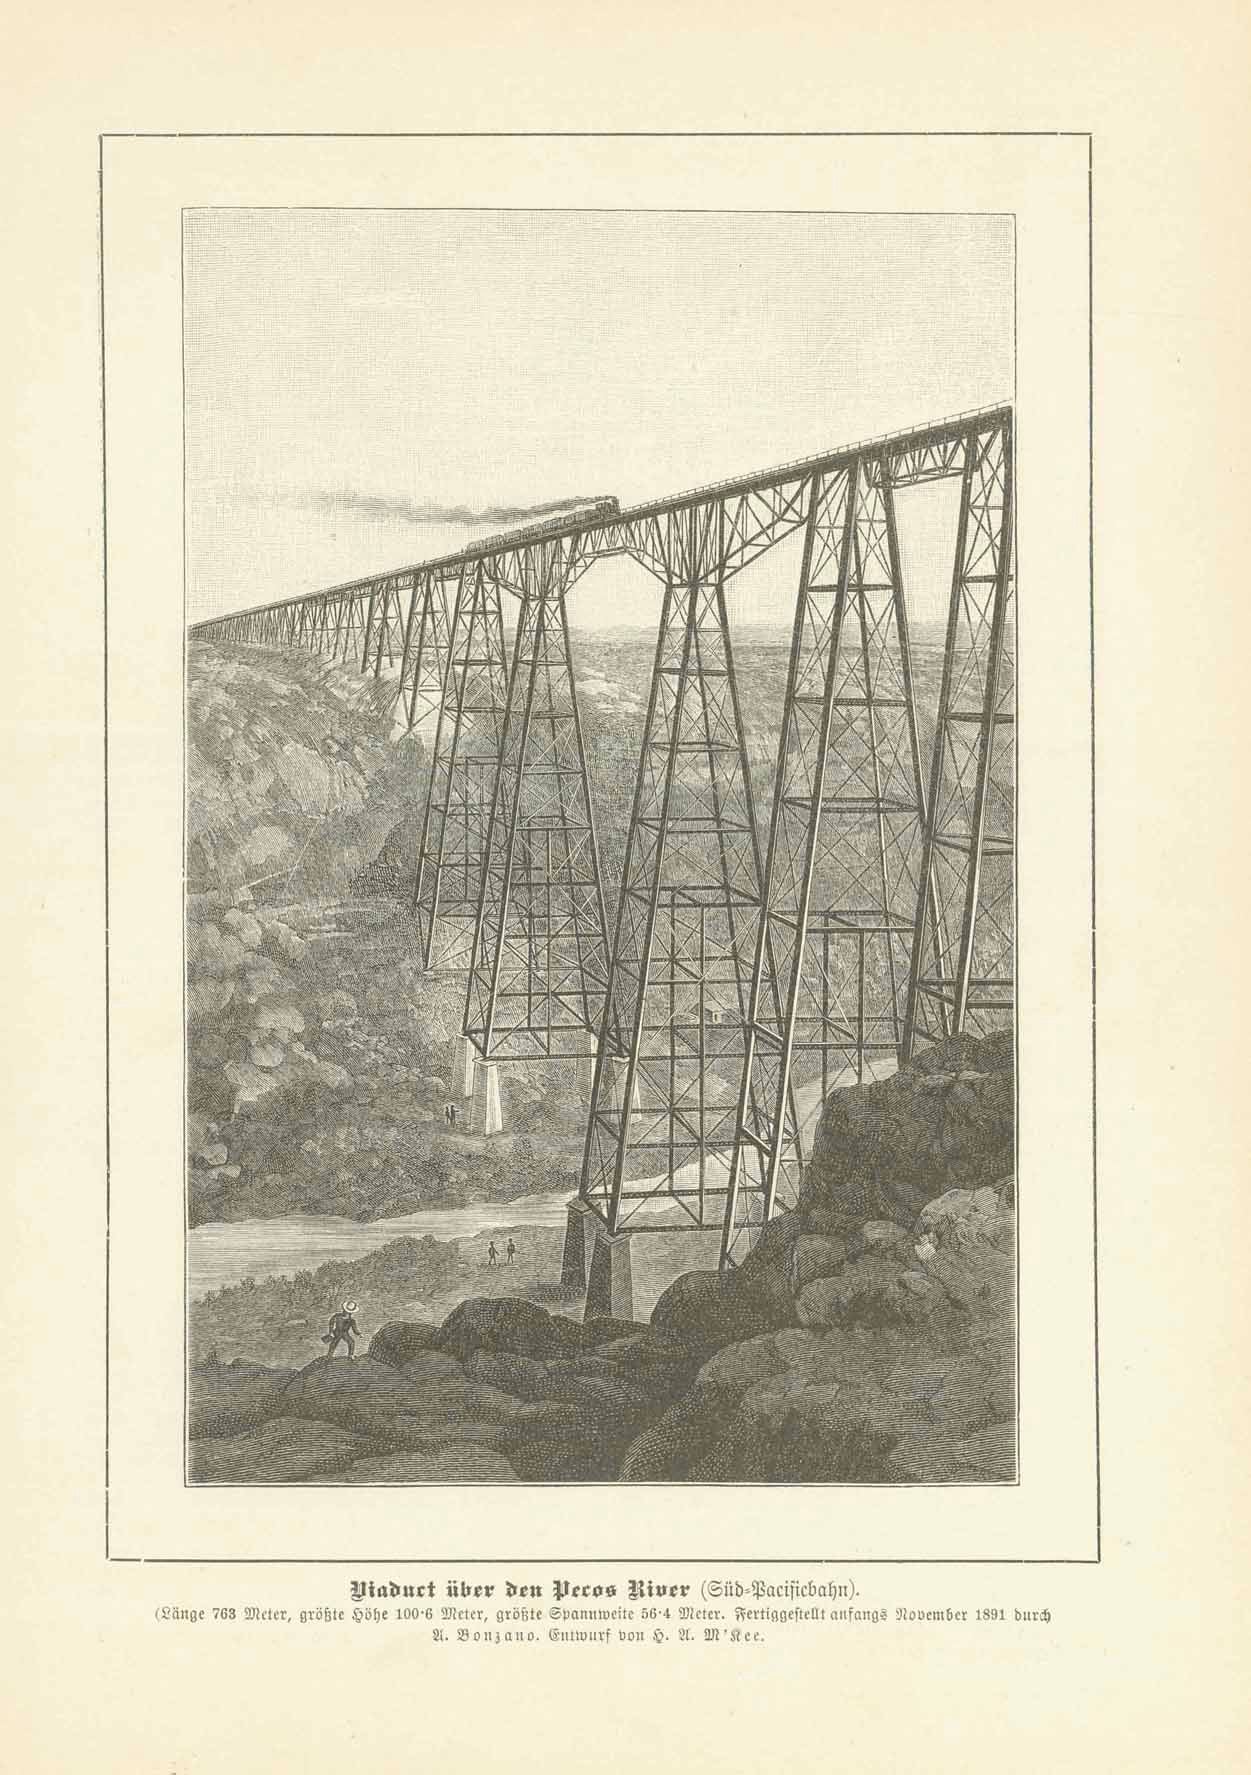 "Viaduct ueber den Pecos River (Sued-Pacificbahn) (Southern Pacific Railroad)  USA, New Mexico, Pecos River, Del Rio, Santa Fe  Wood engraving ca 1895.  Original antique print  